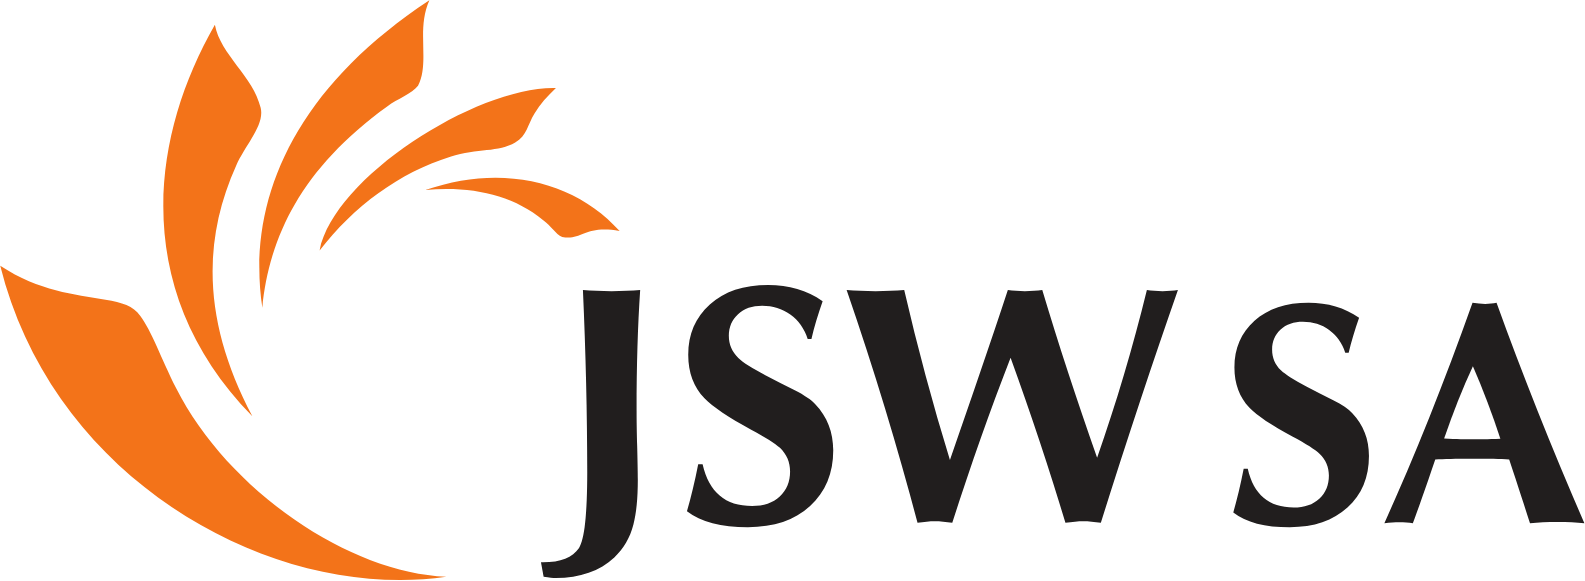 Jastrzebska Spólka Weglowa logo large (transparent PNG)